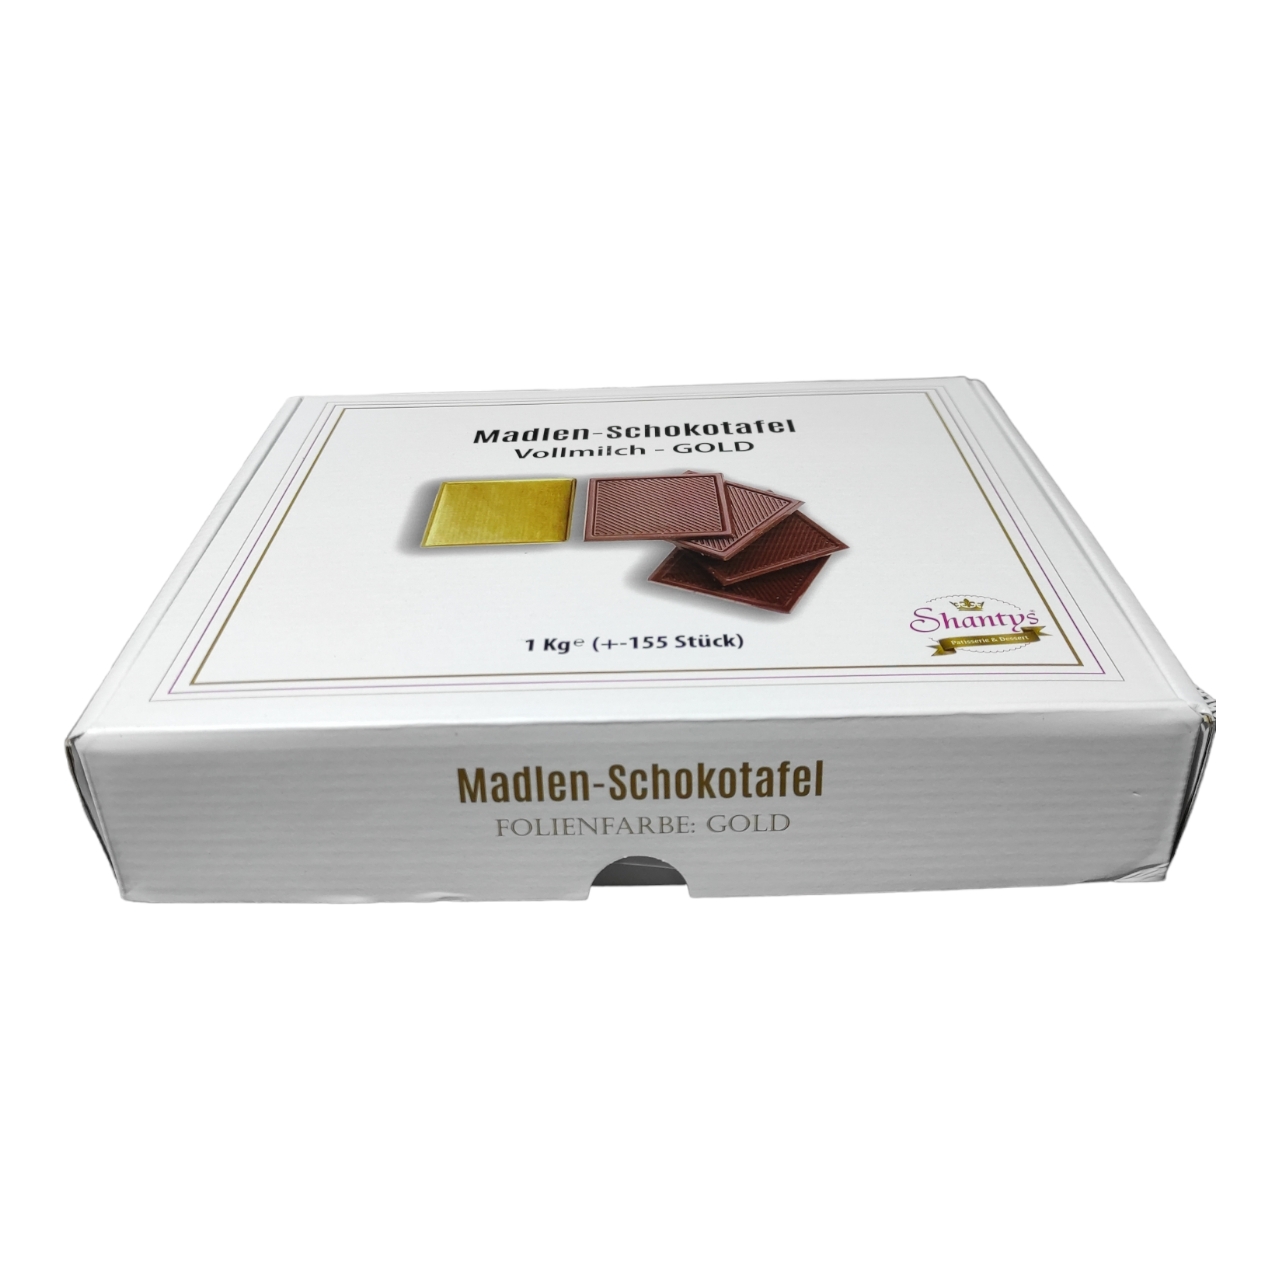 Madlen Schokotafel - Vollmilch - GOLD - 1 Kg (ca. 155 Stück) - Shantys